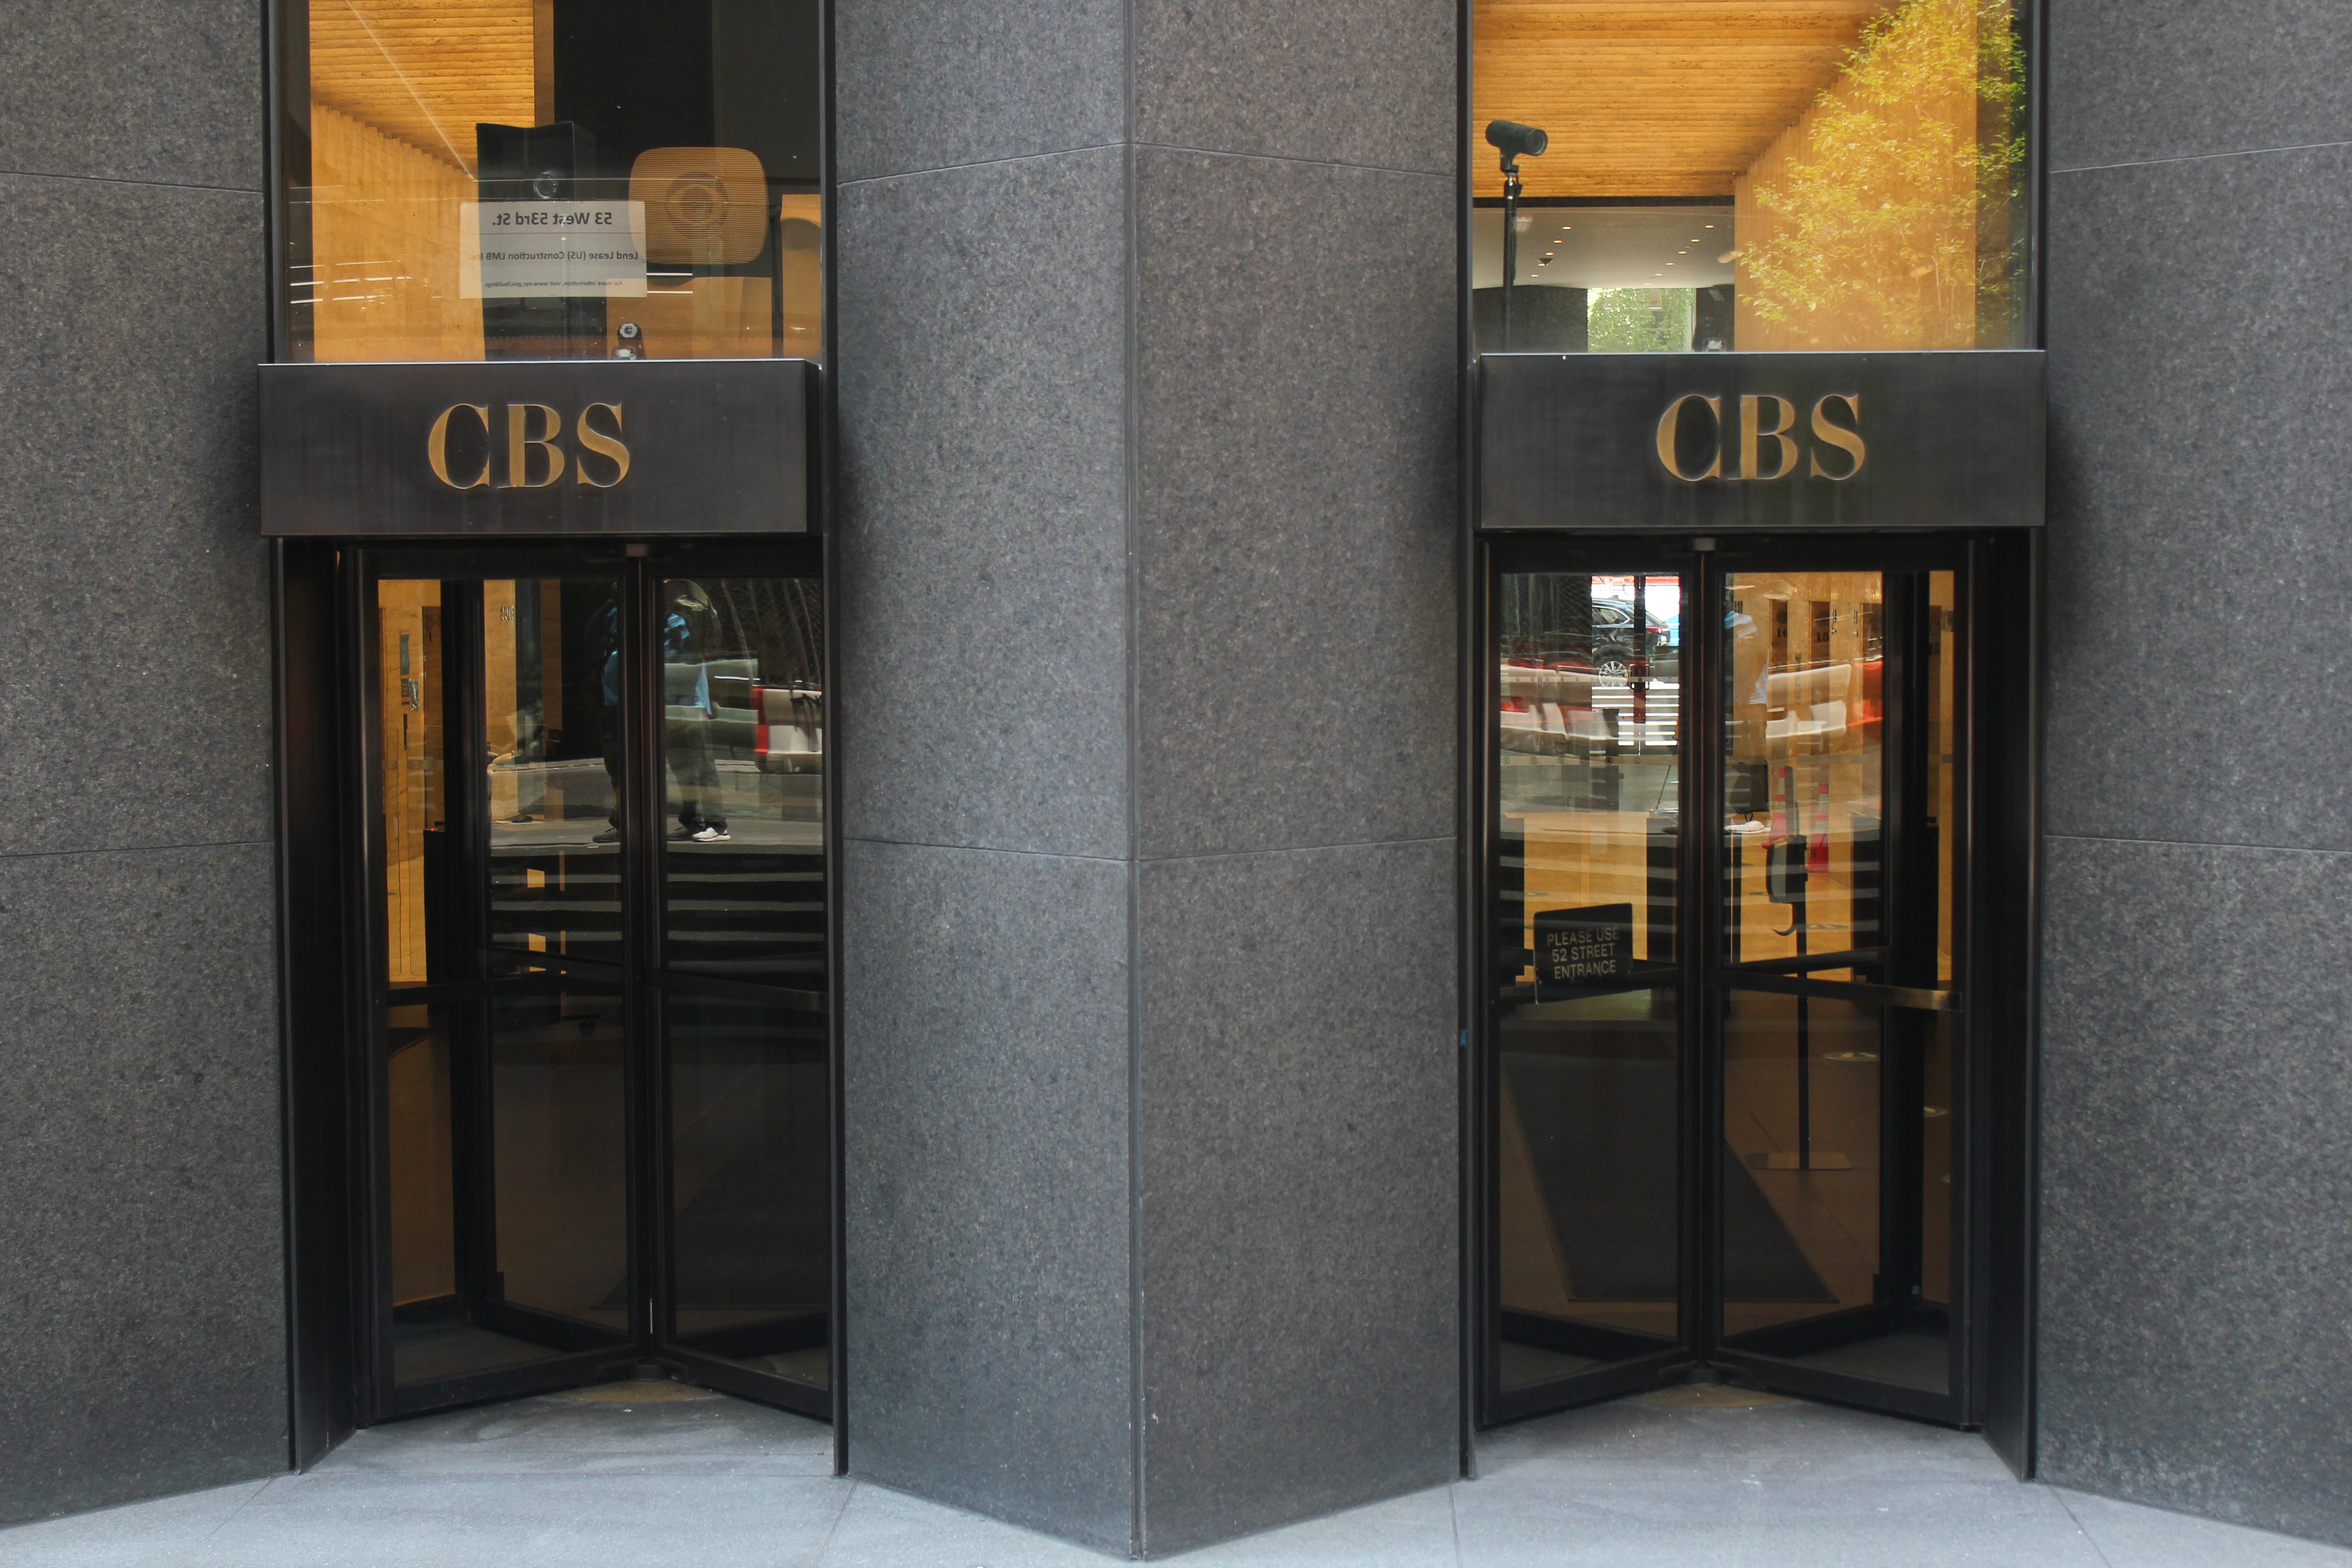 Paramount settles CBS shareholder #MeToo class action for over $14M